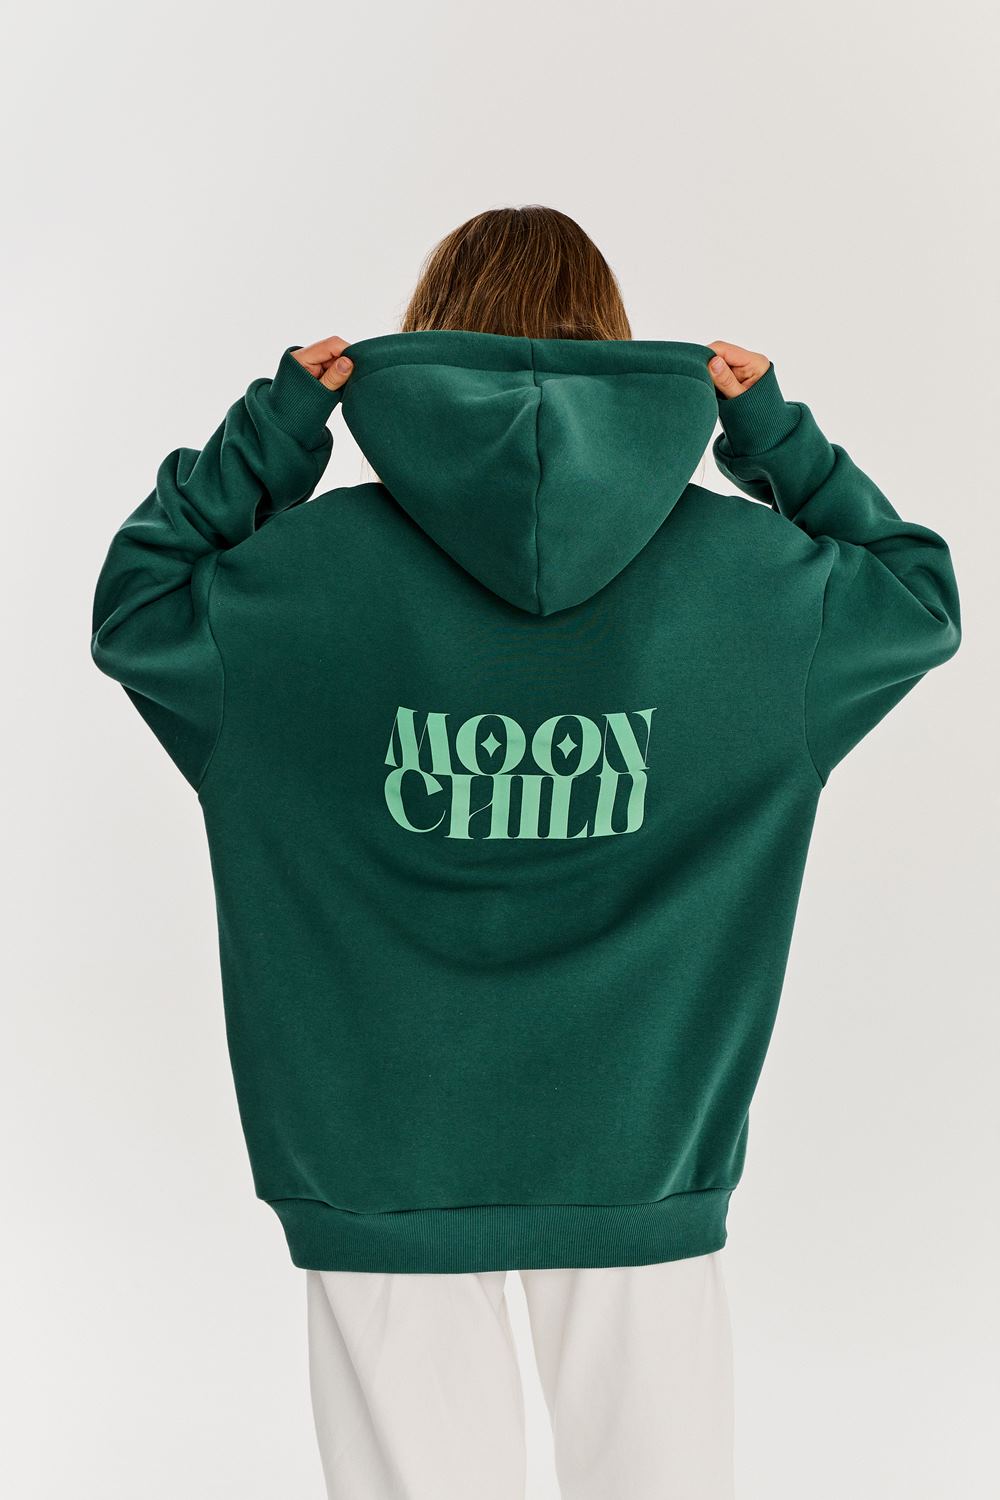 Moon Child hoodie